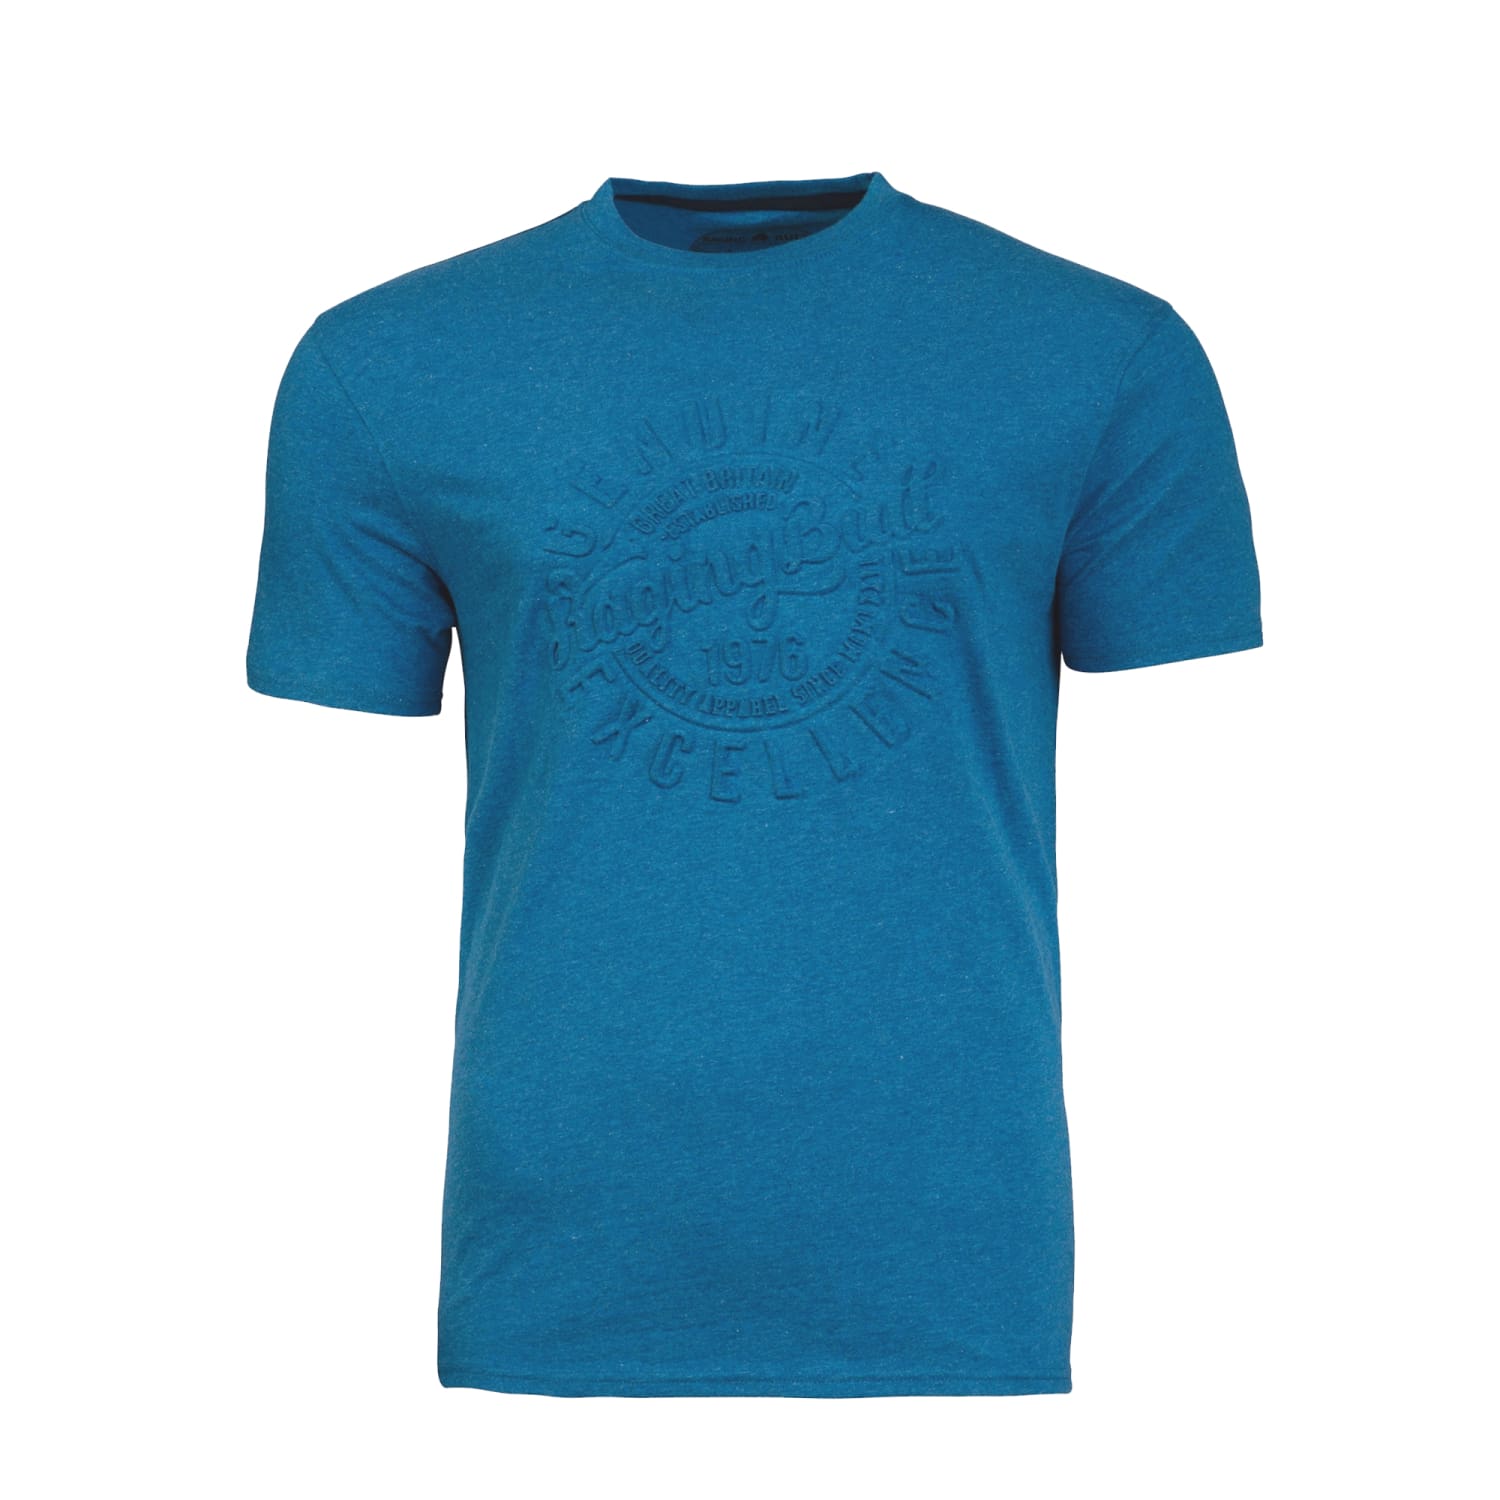 Raging Bull T-Shirt - Excellence Tee - A18TS96 - Denim 1